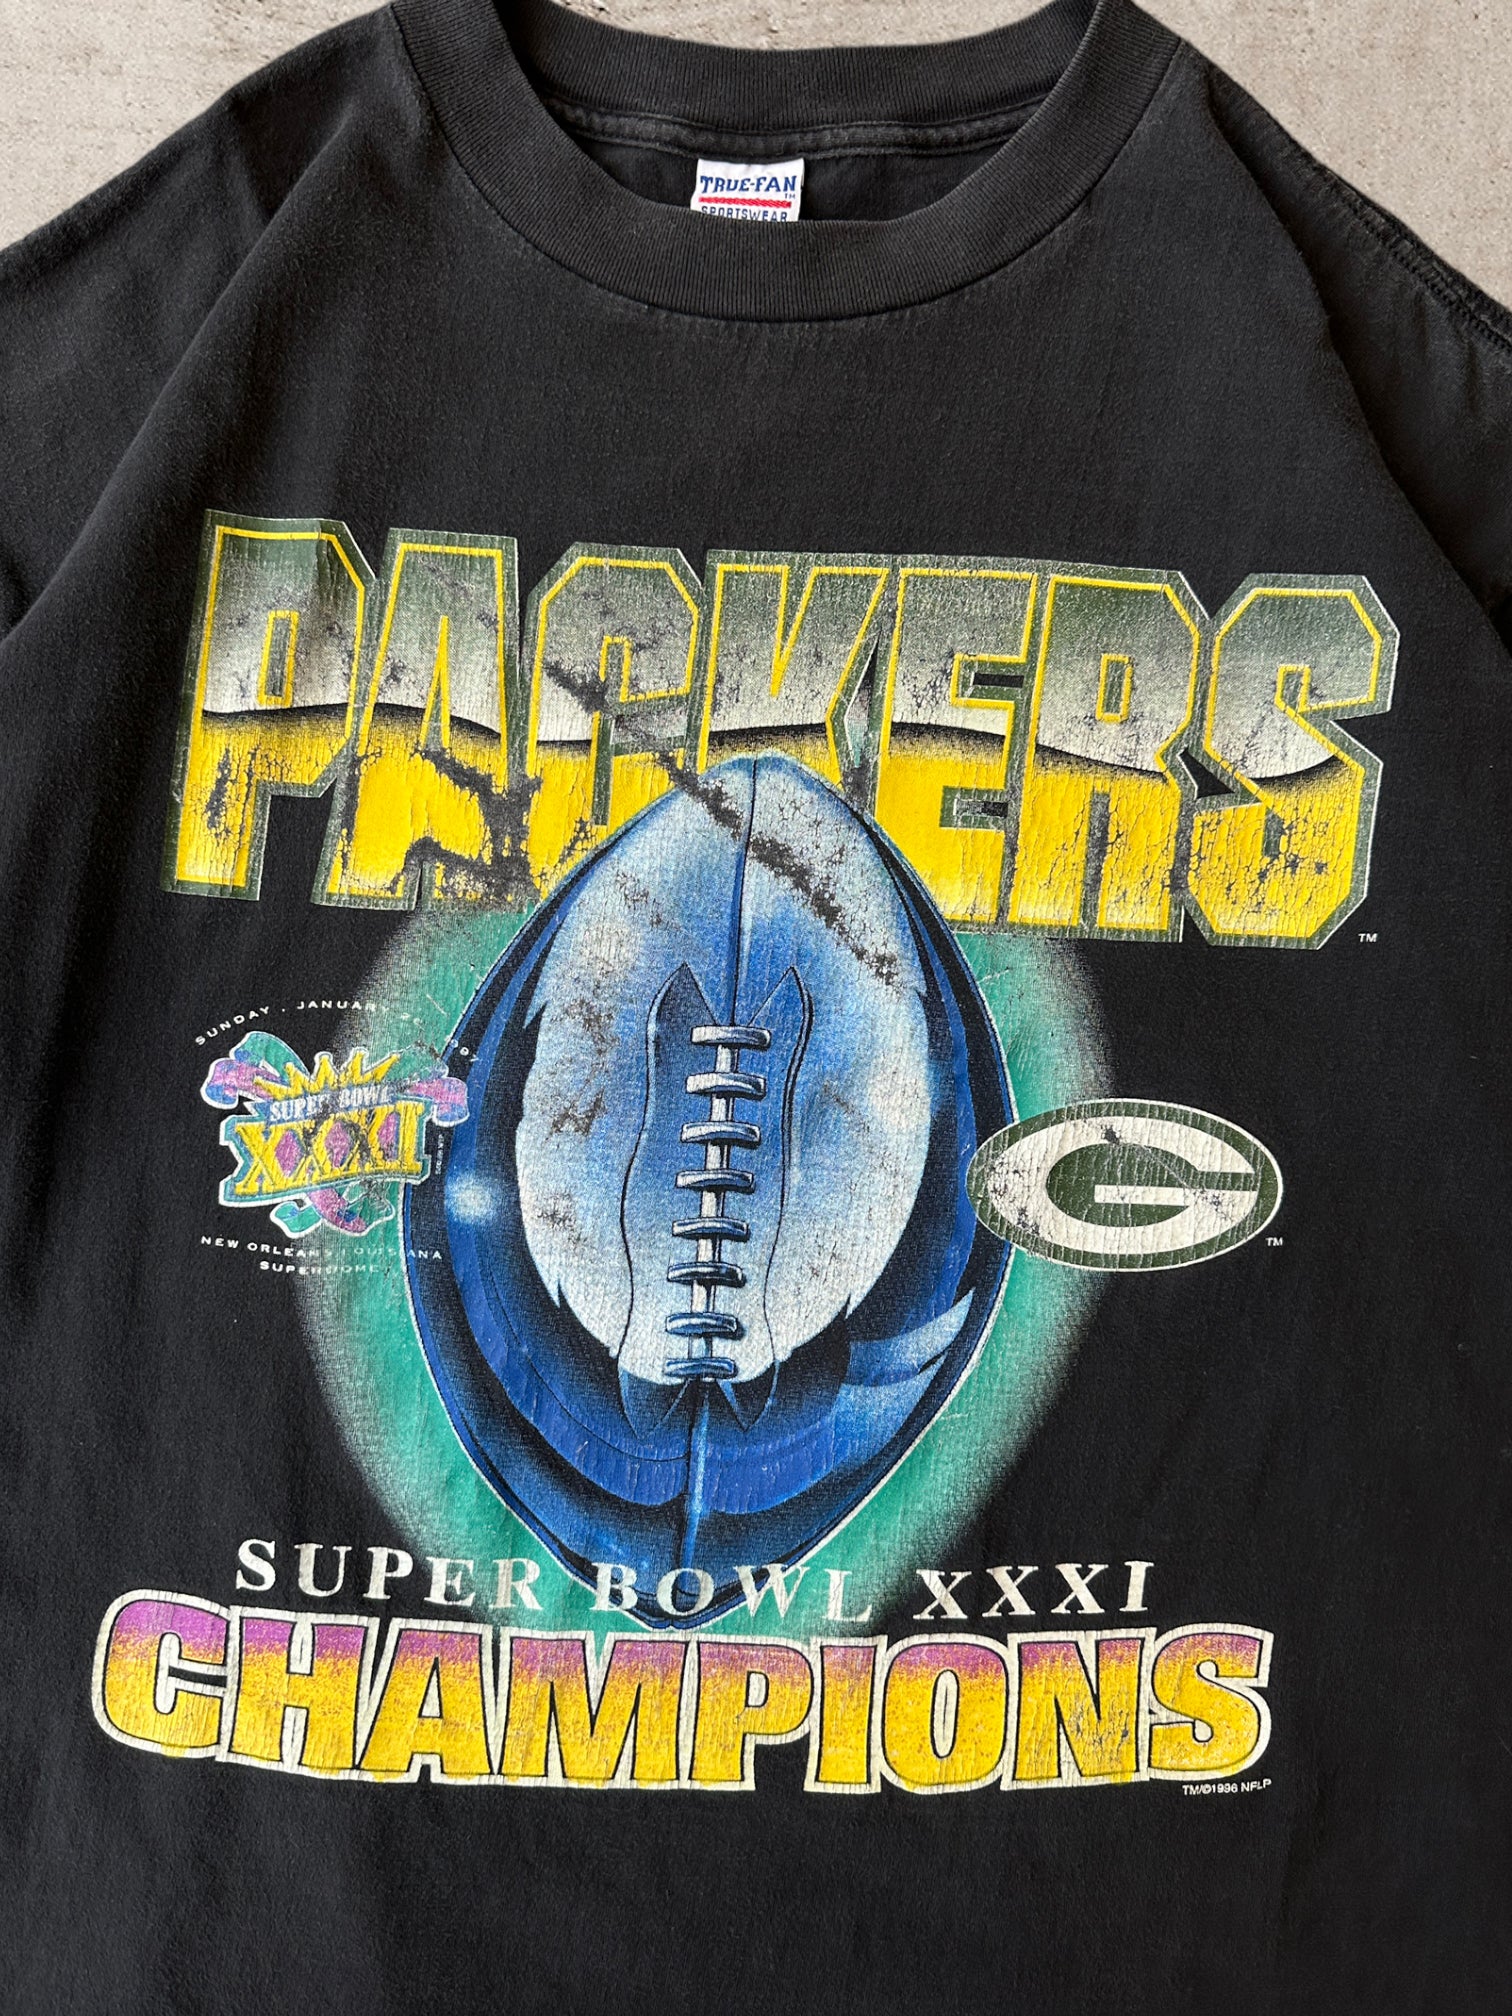 1997 Green Bay Packers Super Bowl Champs T-Shirt - XL